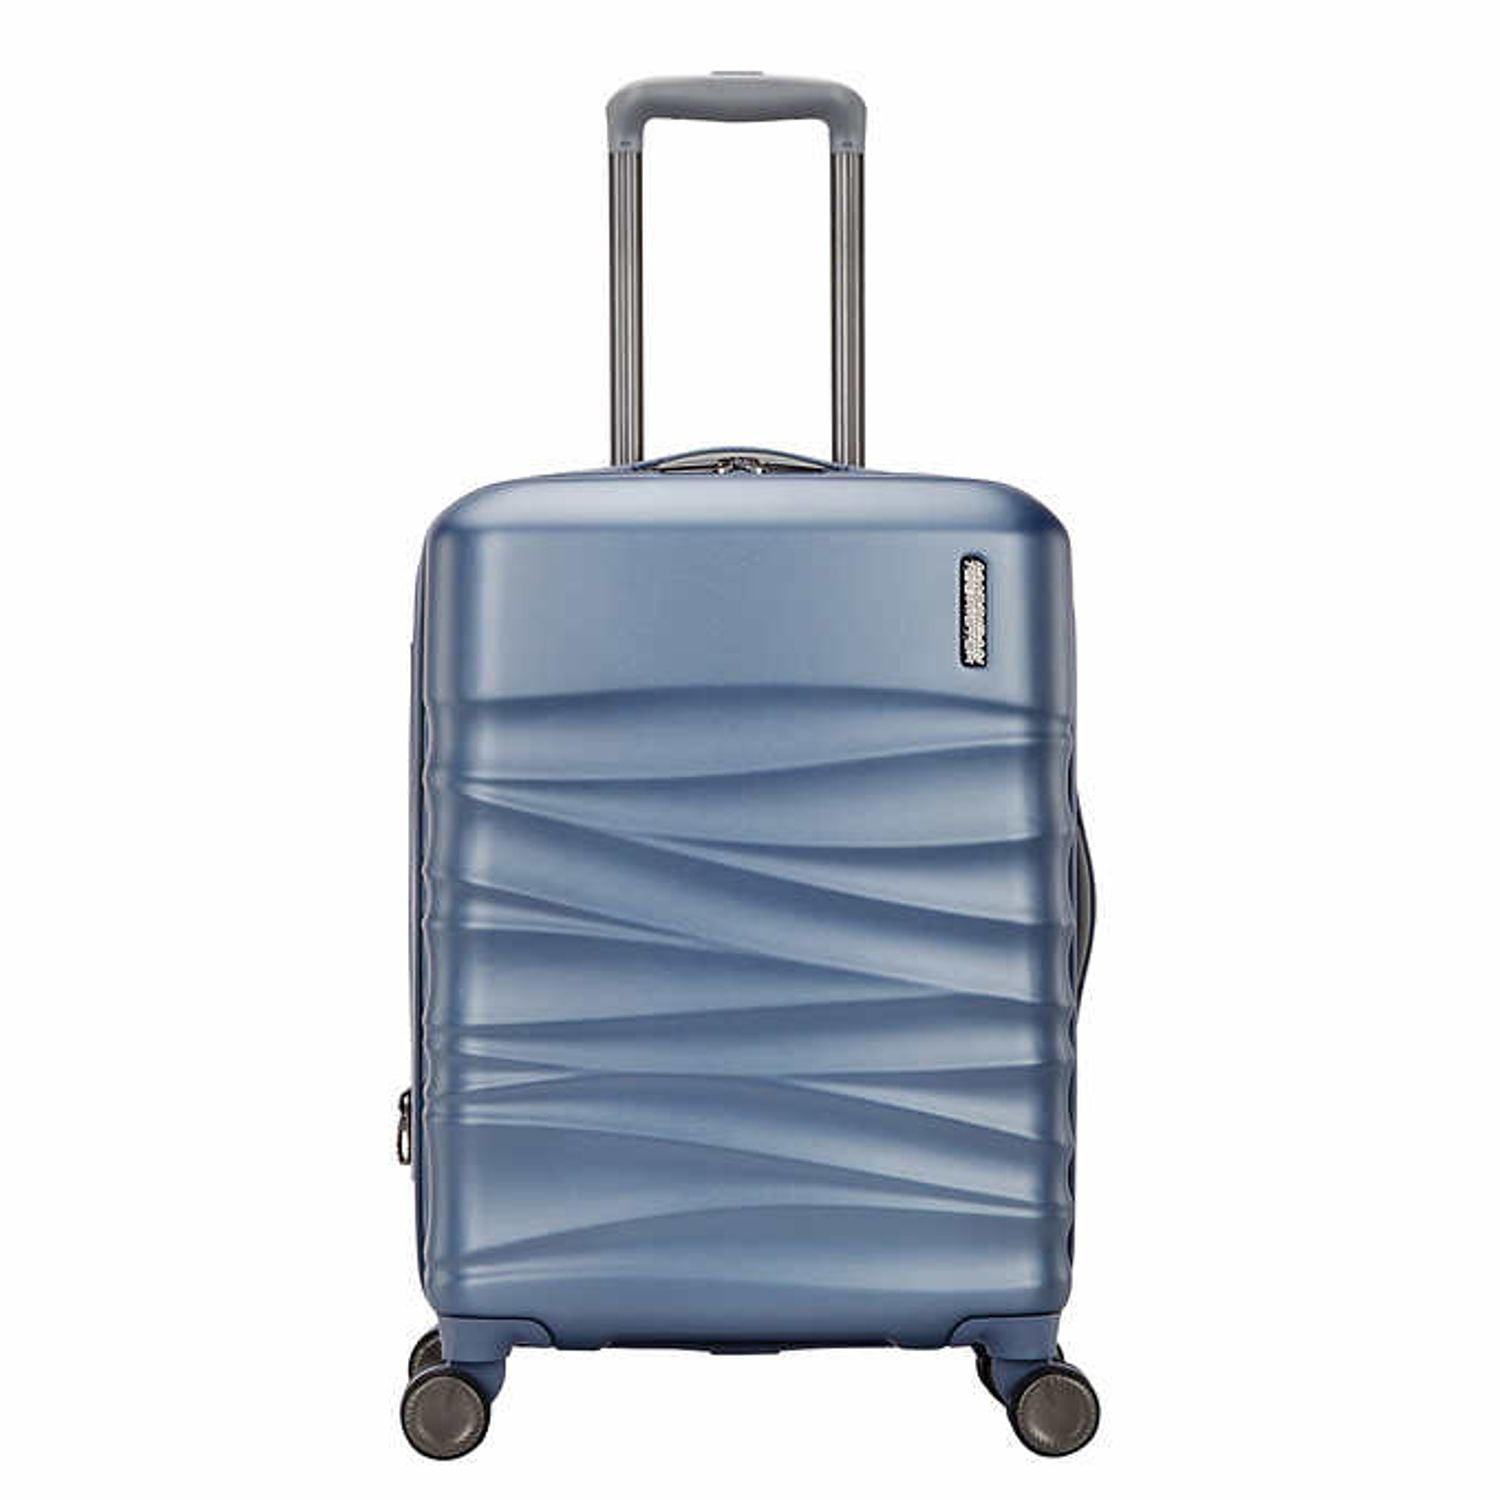 American Tourister Tranquil 3-Piece Hardside Travel Luggage Set - BLACK